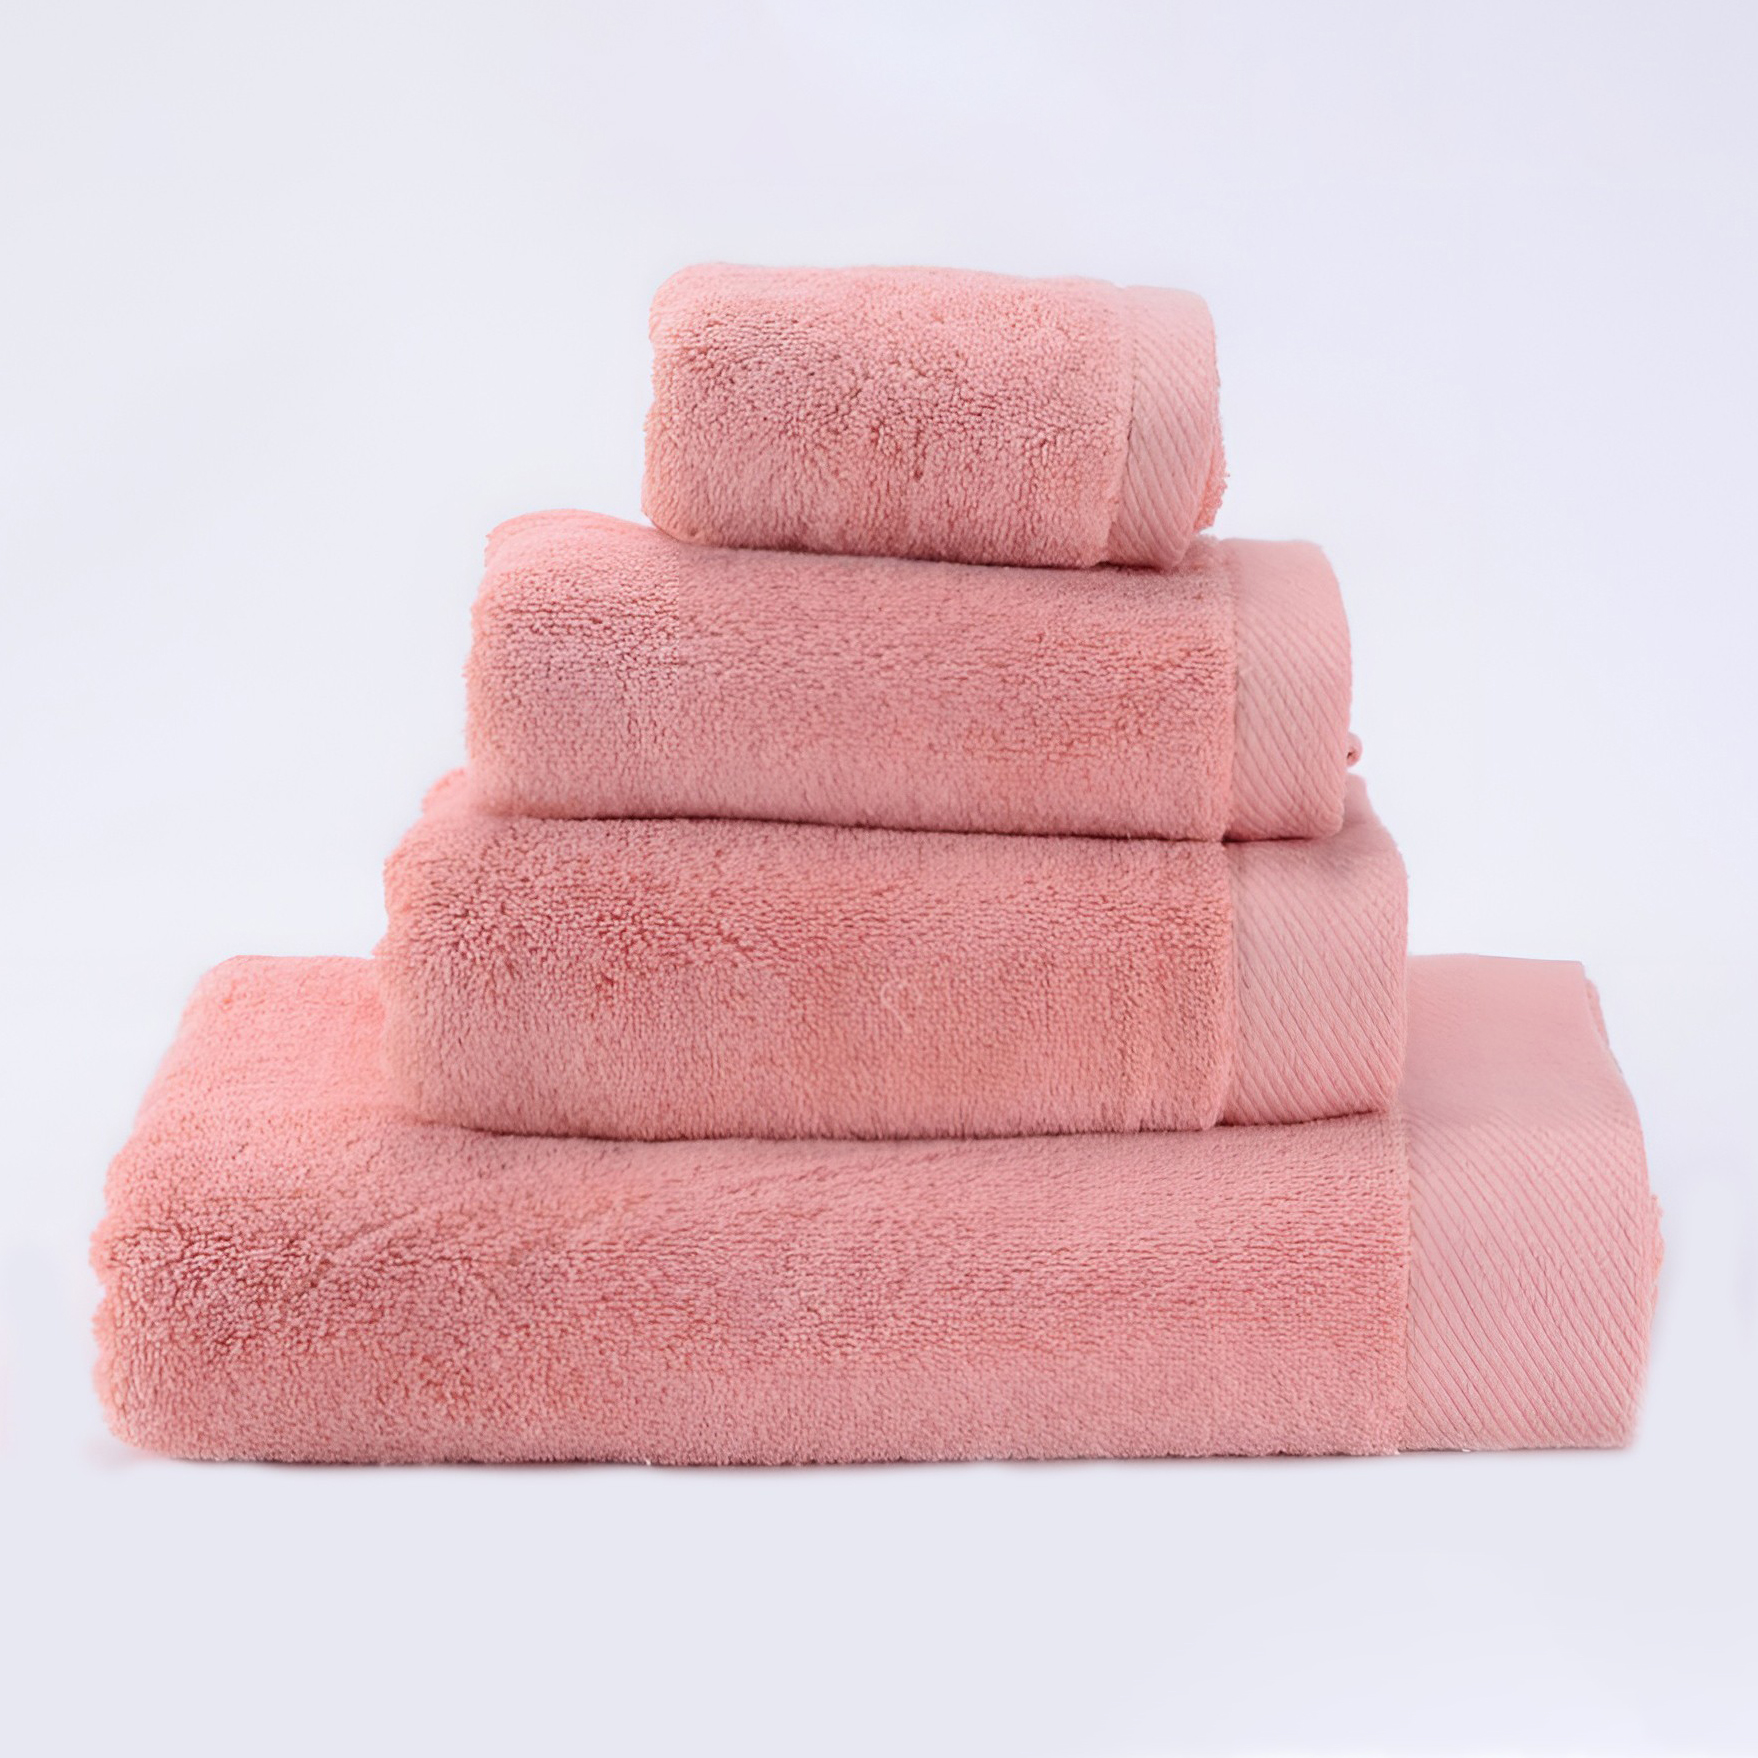 Полотенце Leona цвет: розовый (40х70 см), размер 40х70 см valt914813 Полотенце Leona цвет: розовый (40х70 см) - фото 1